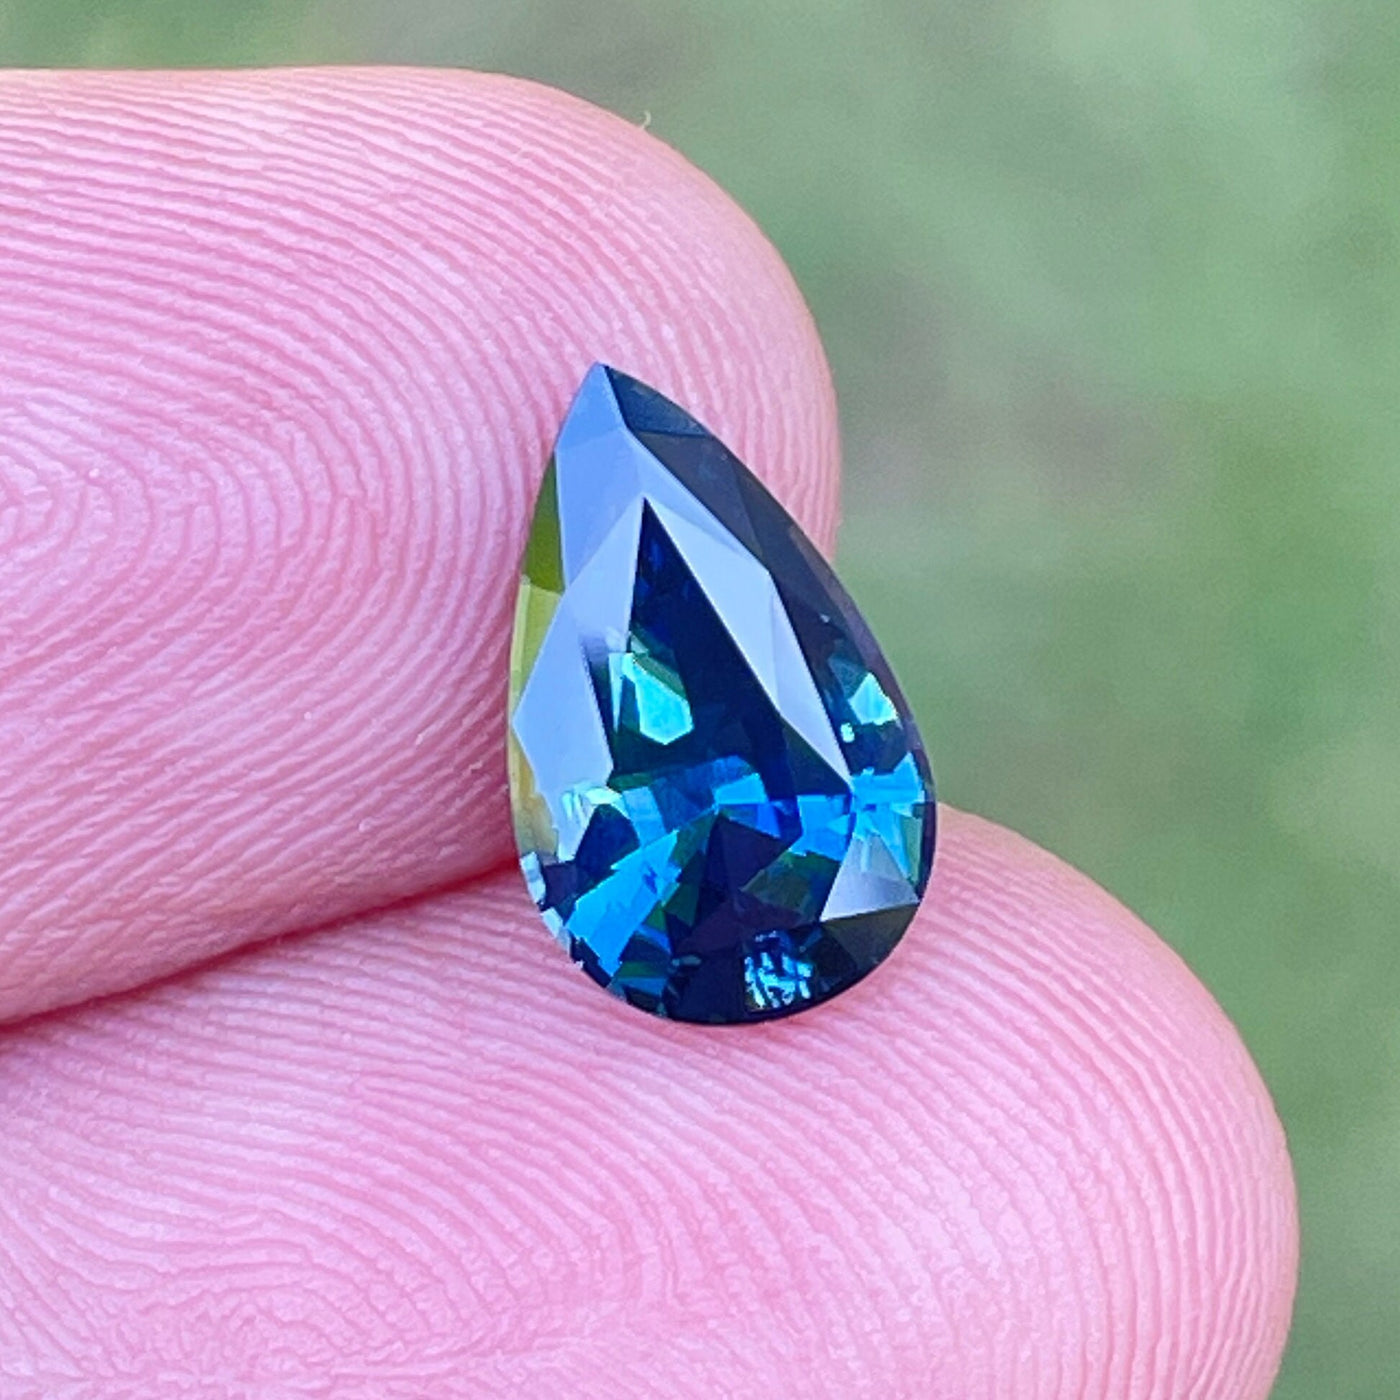 Blue Sapphire 2.15Ct